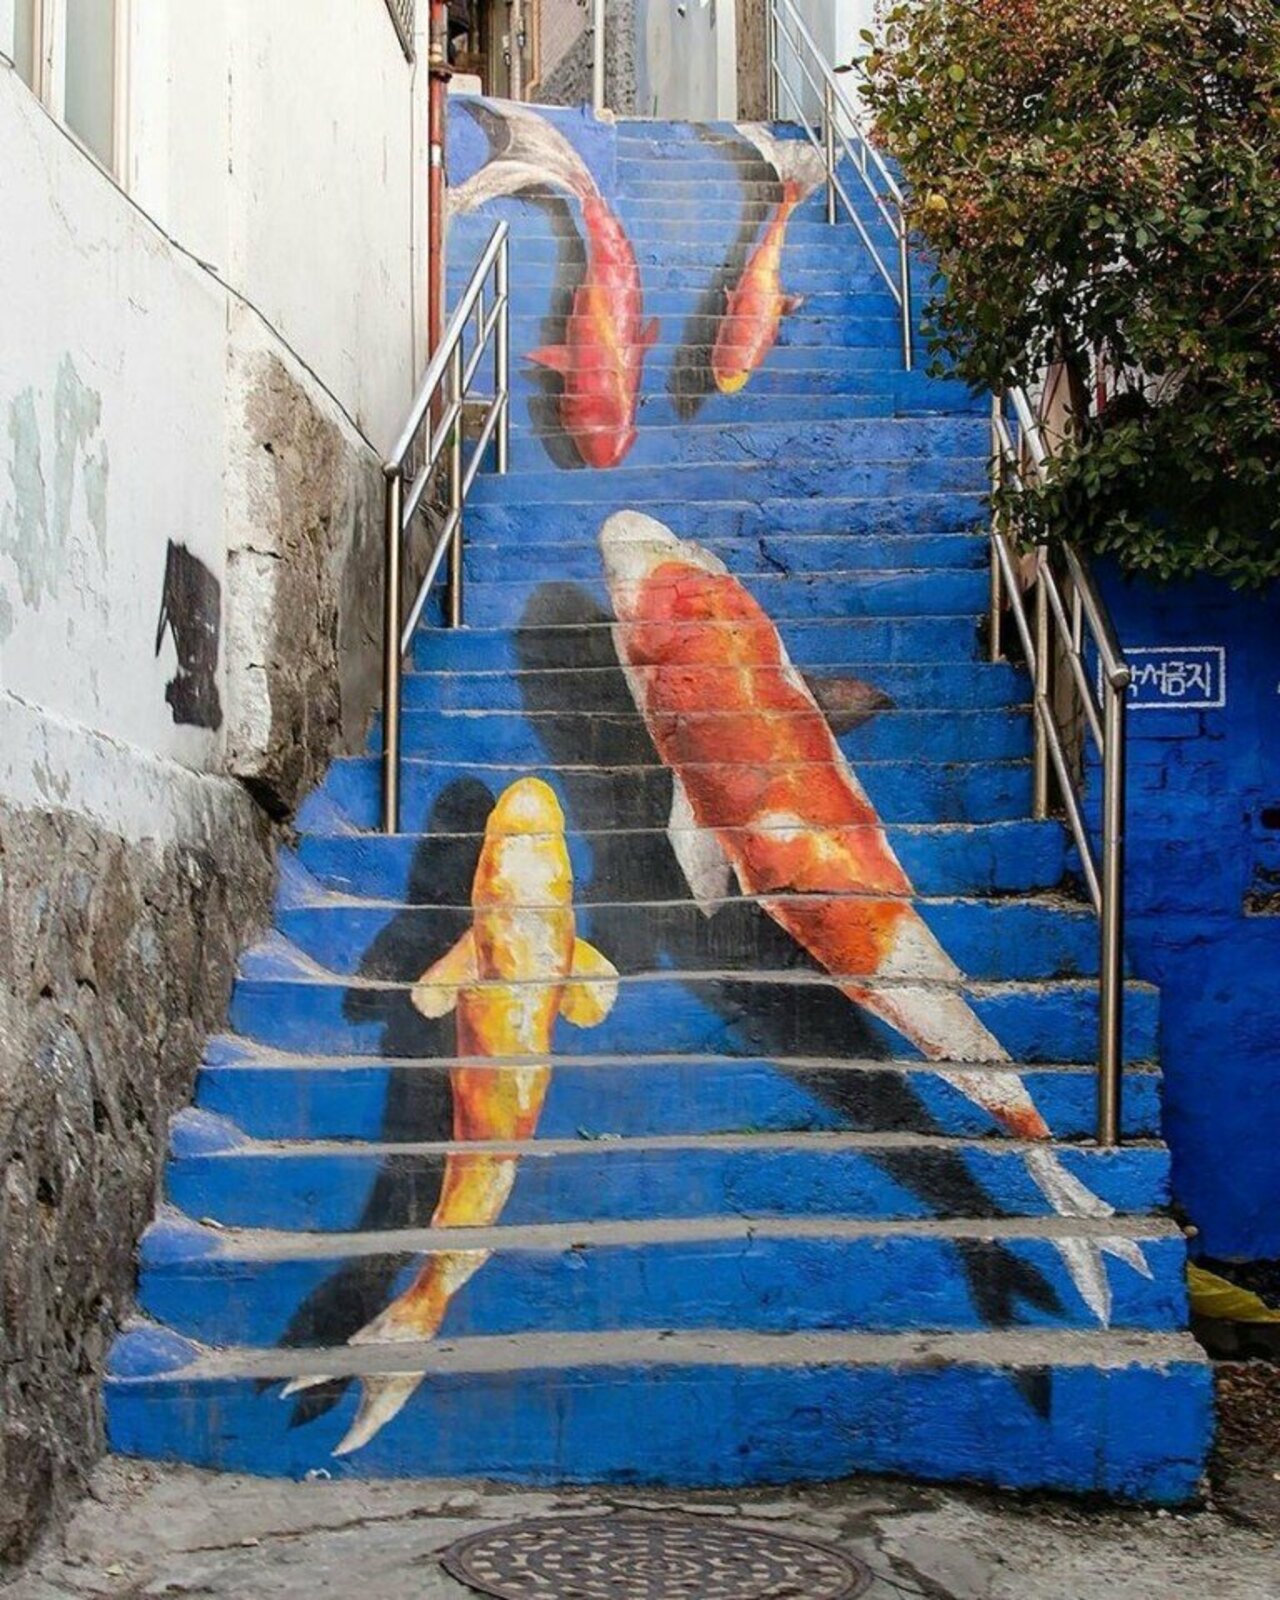 graffiti on the steps #steps #art #graffiti https://t.co/RHfP84jeYZ